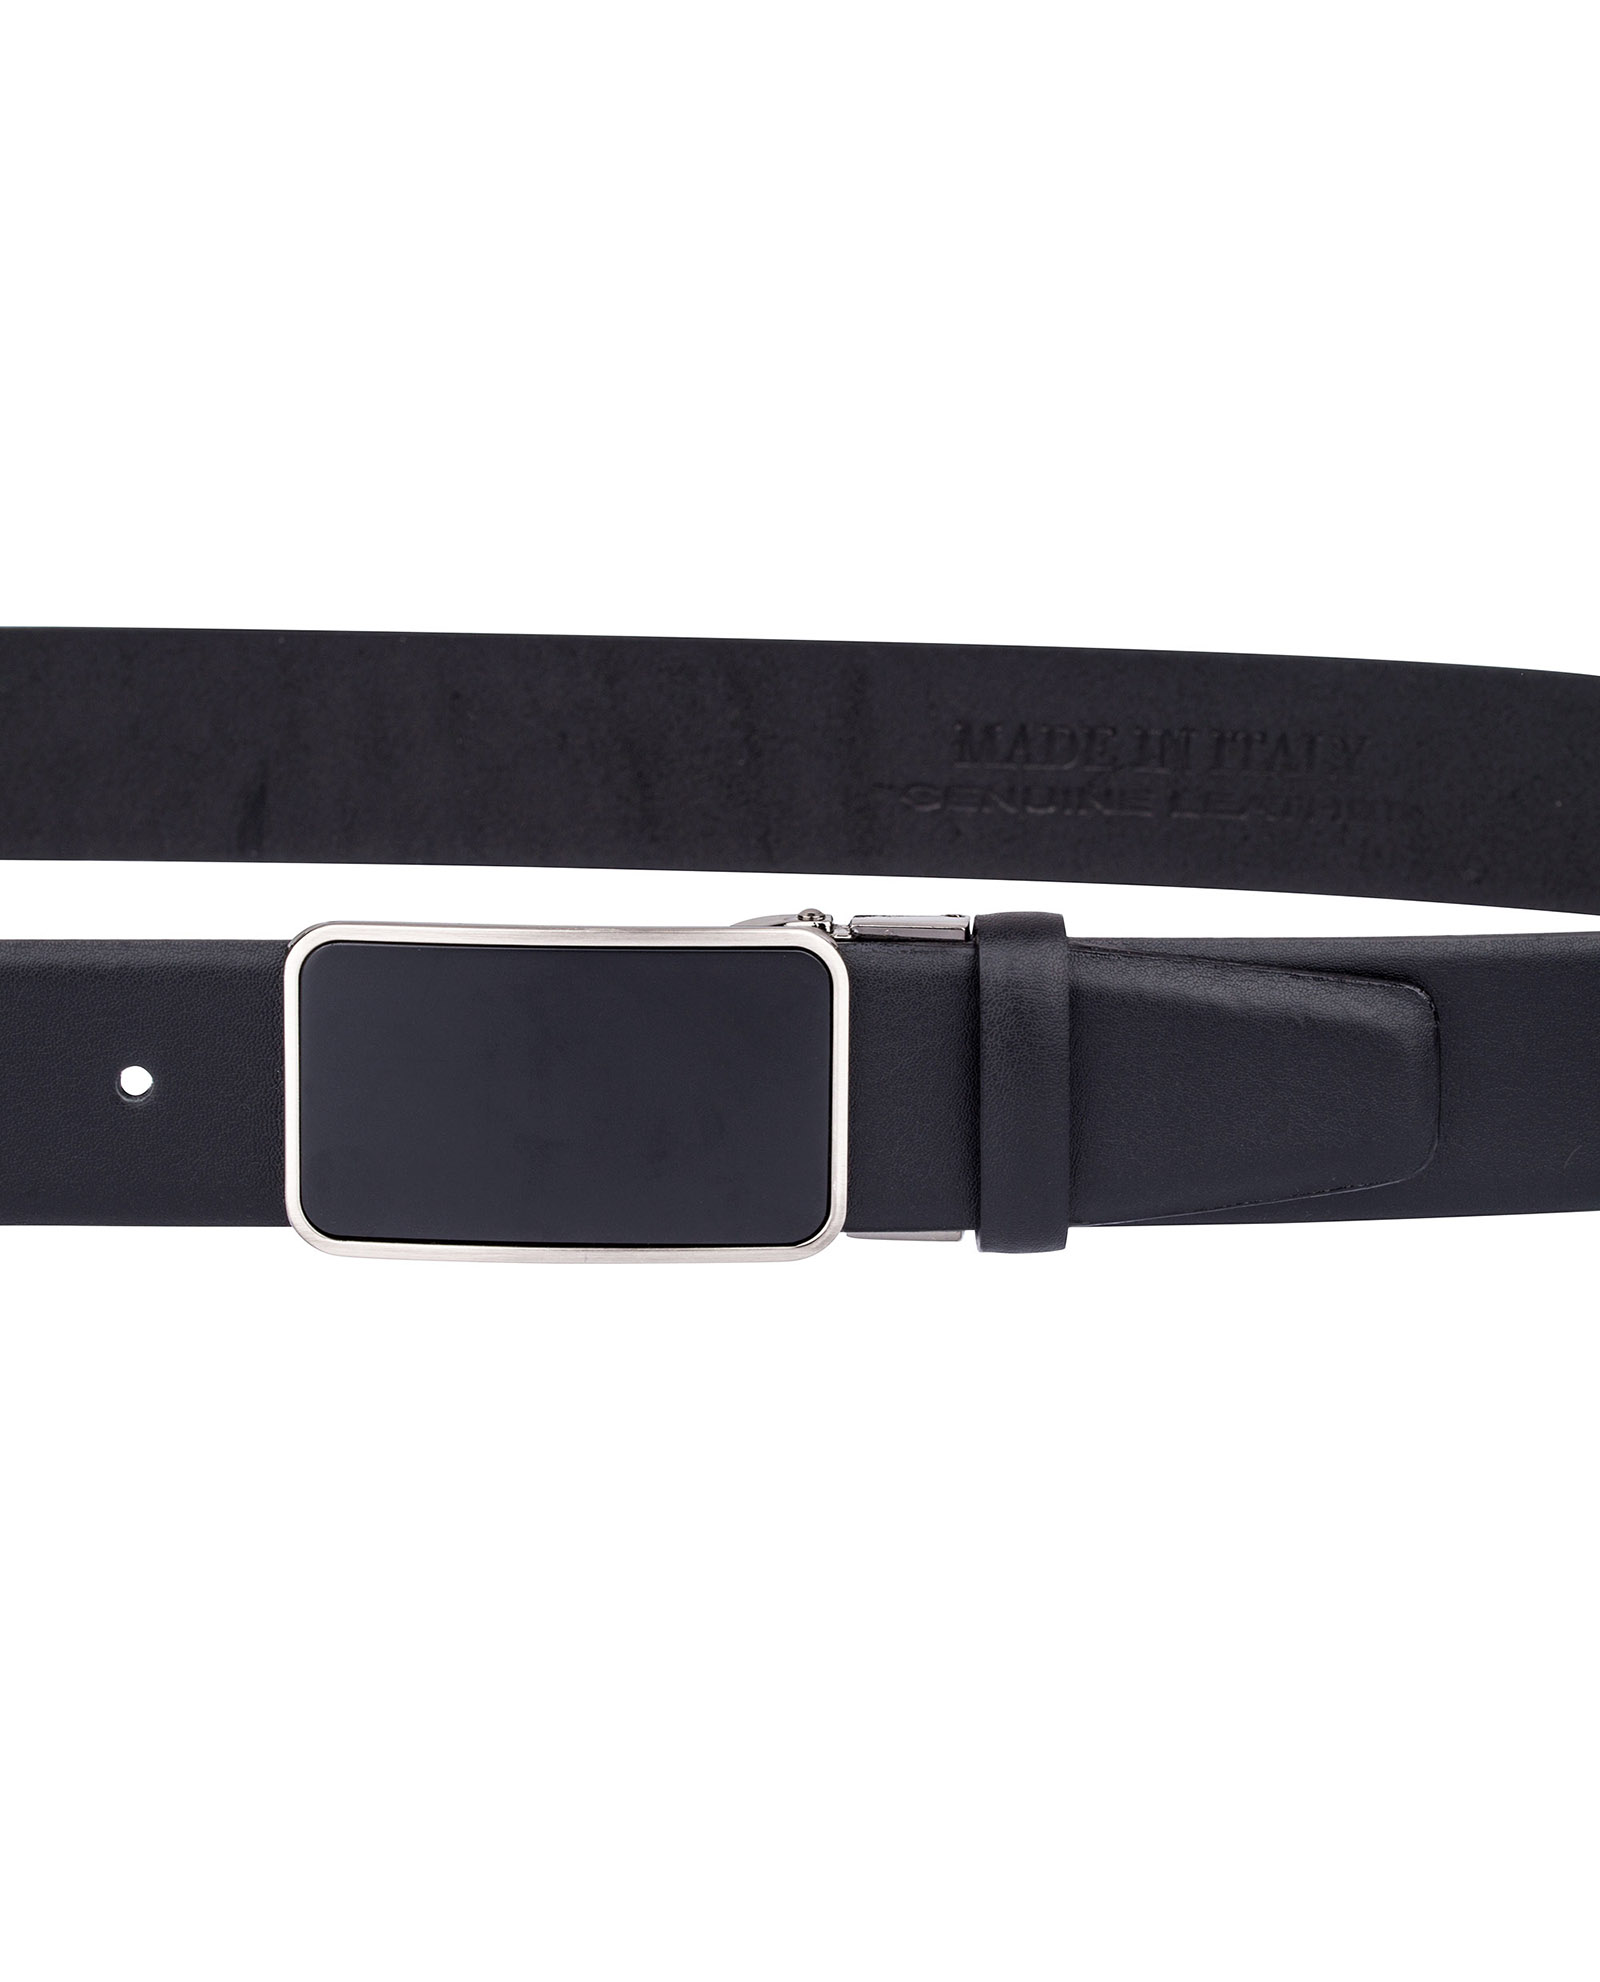 Buy Men's Black Casual Leather Belt - Capo Pelle - Free Shipping